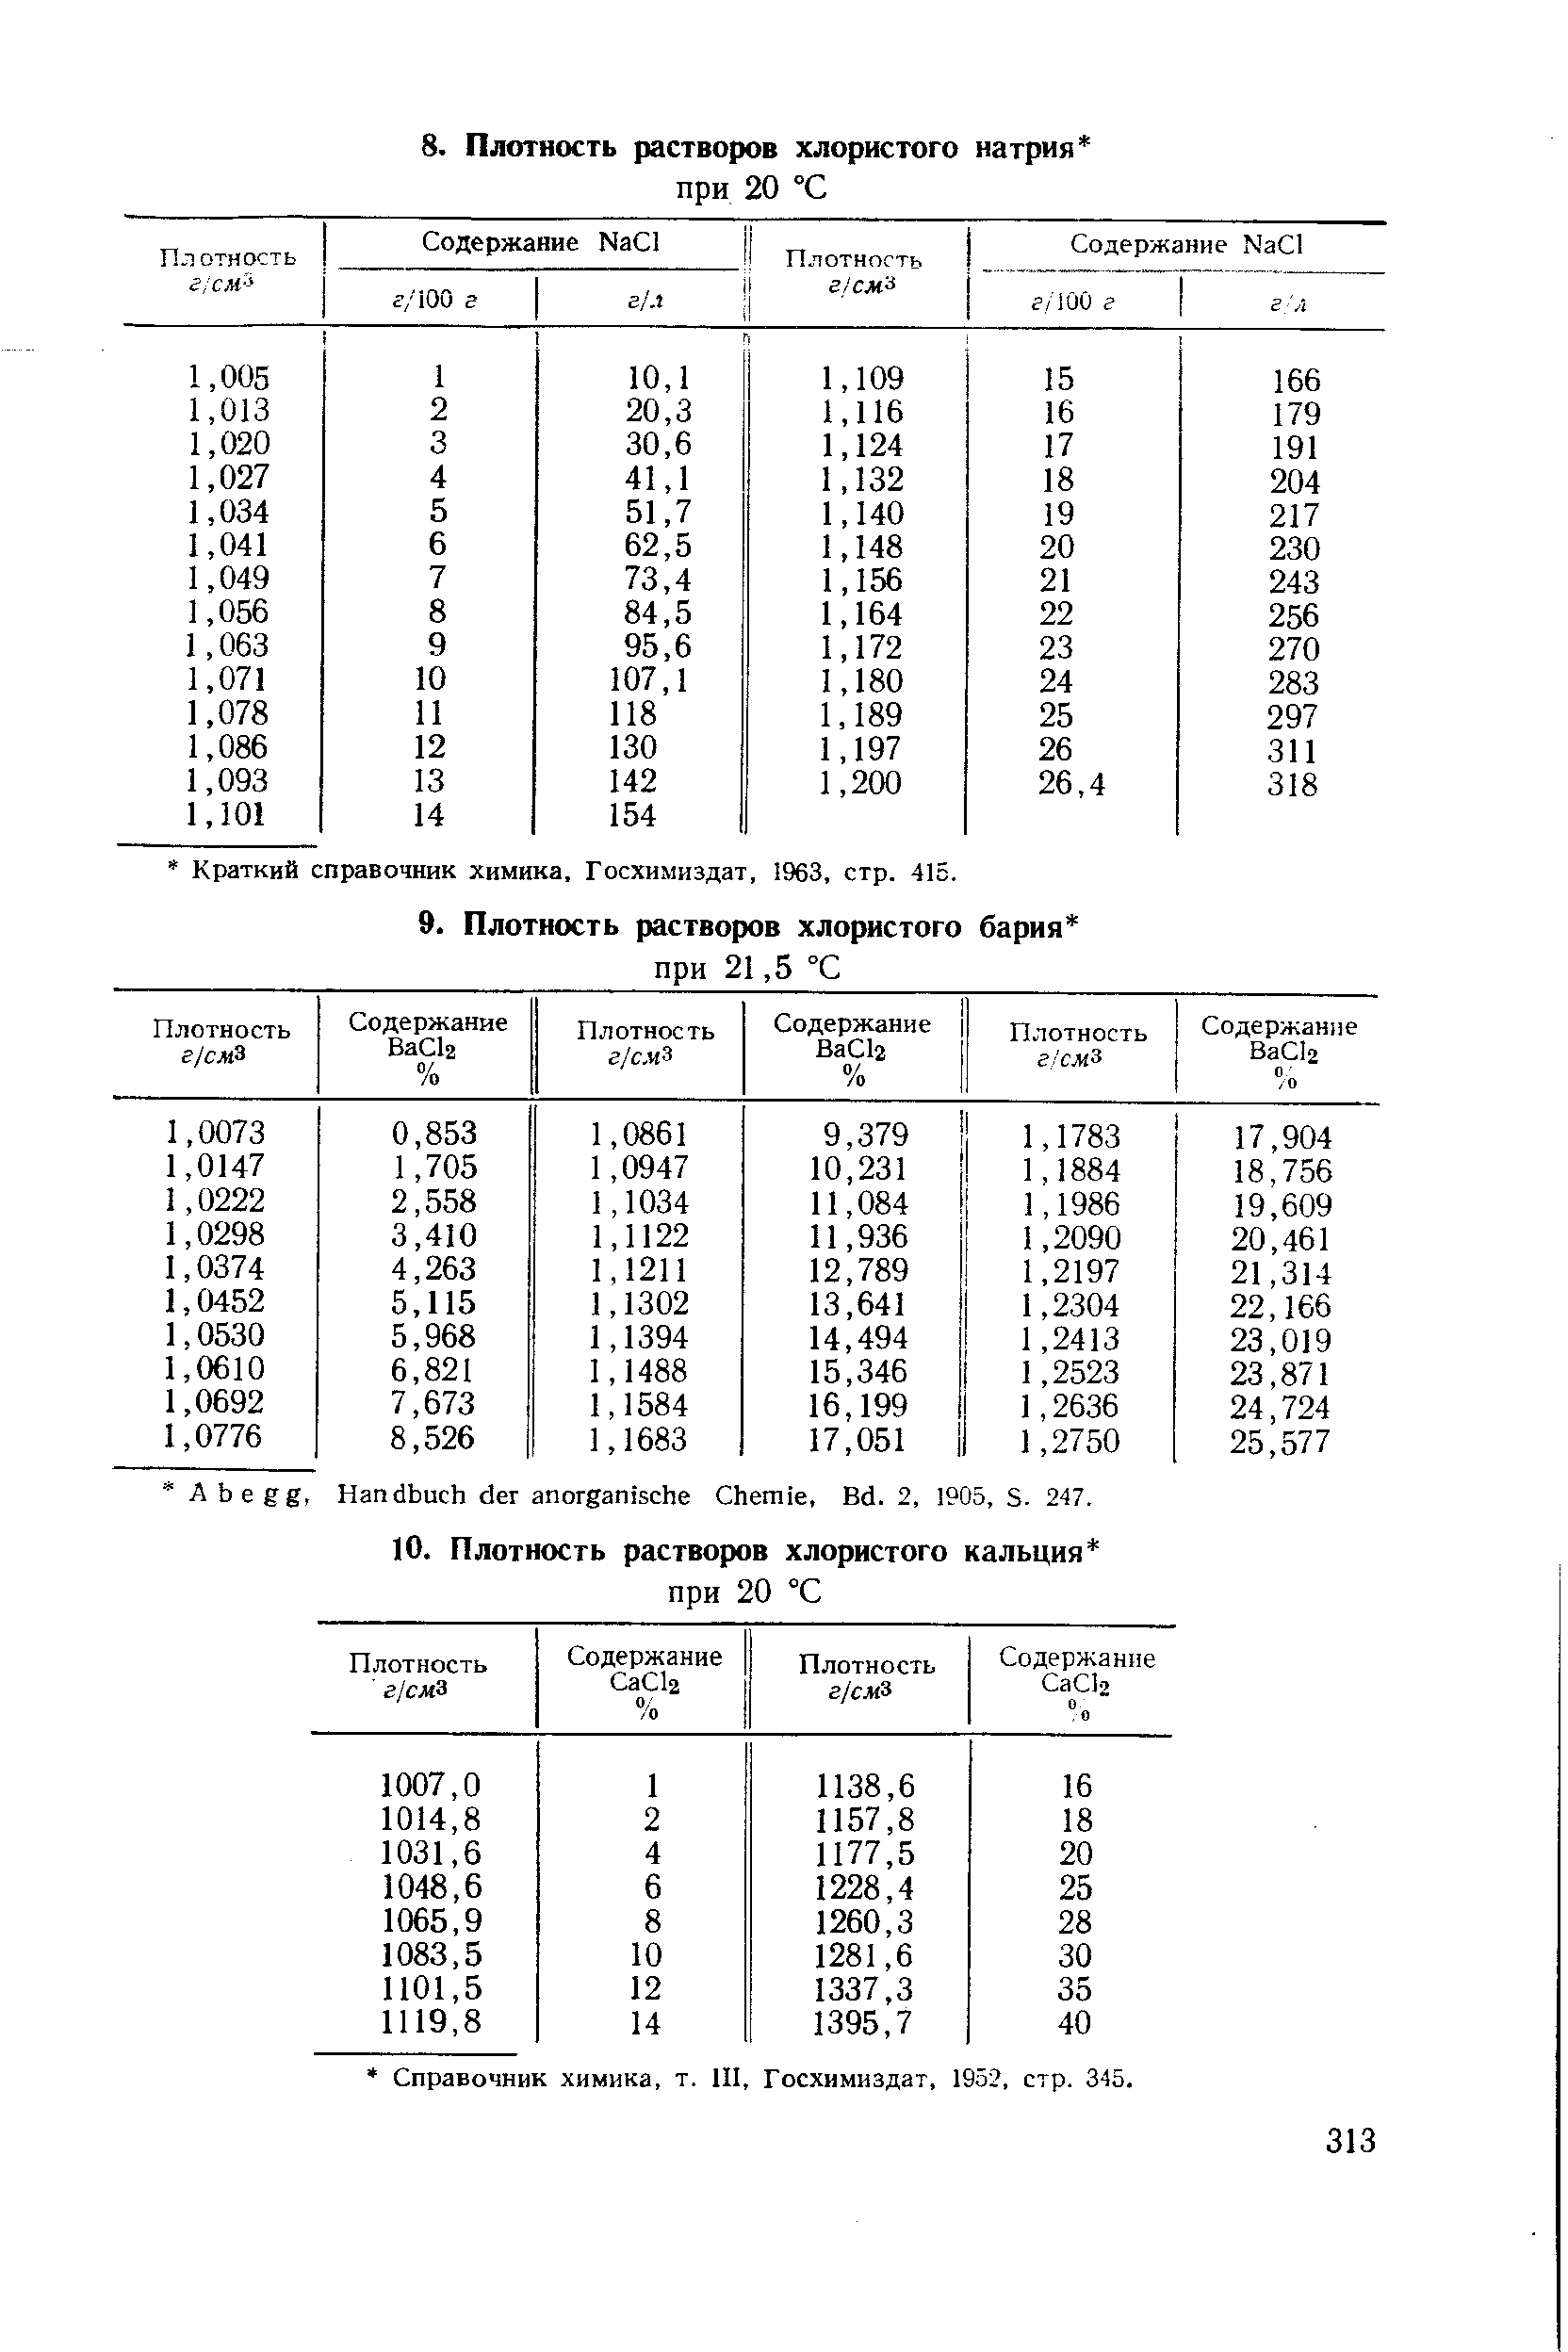 Краткий справочник химика, Госхимиздат, 1963, стр. 415.